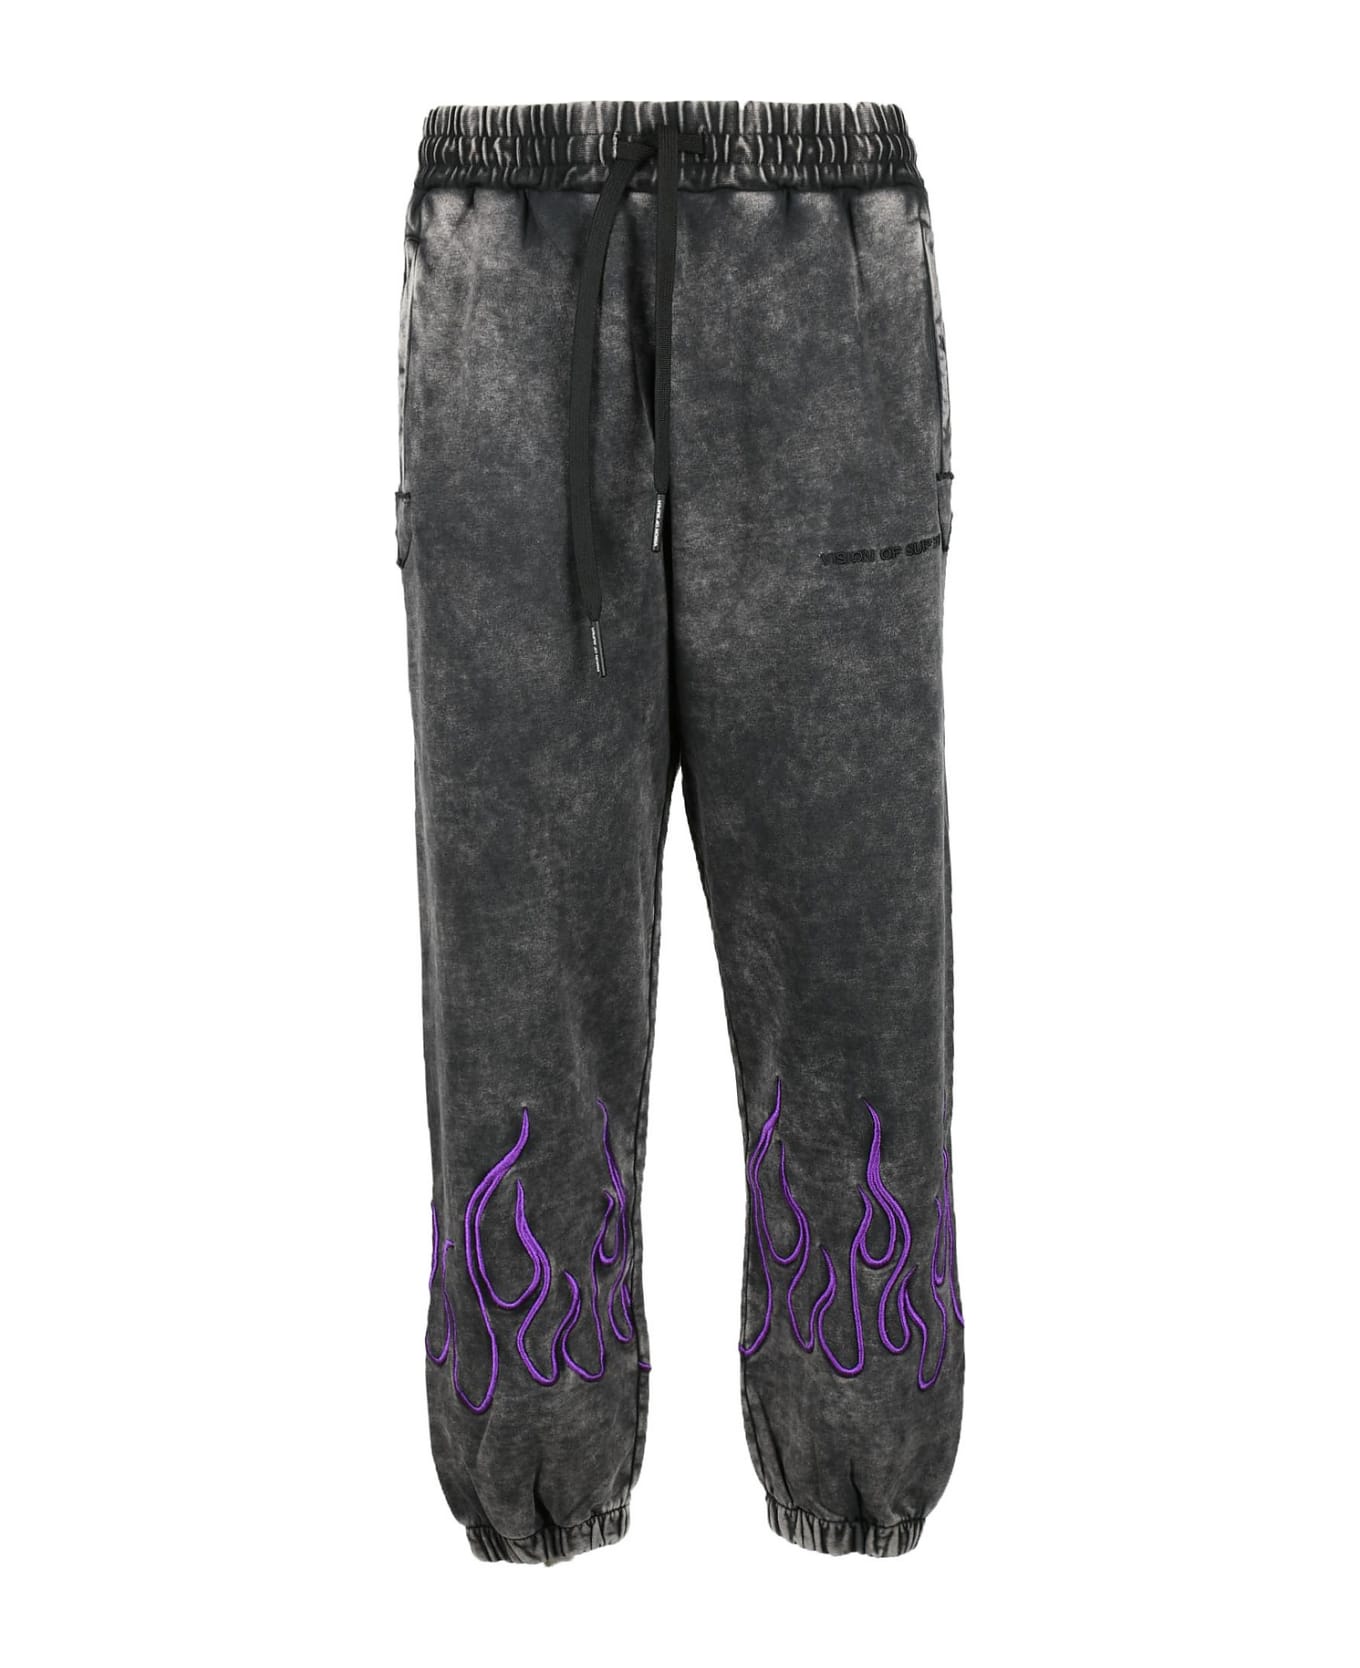 Vision of Super Men's Viola/grigio Pants